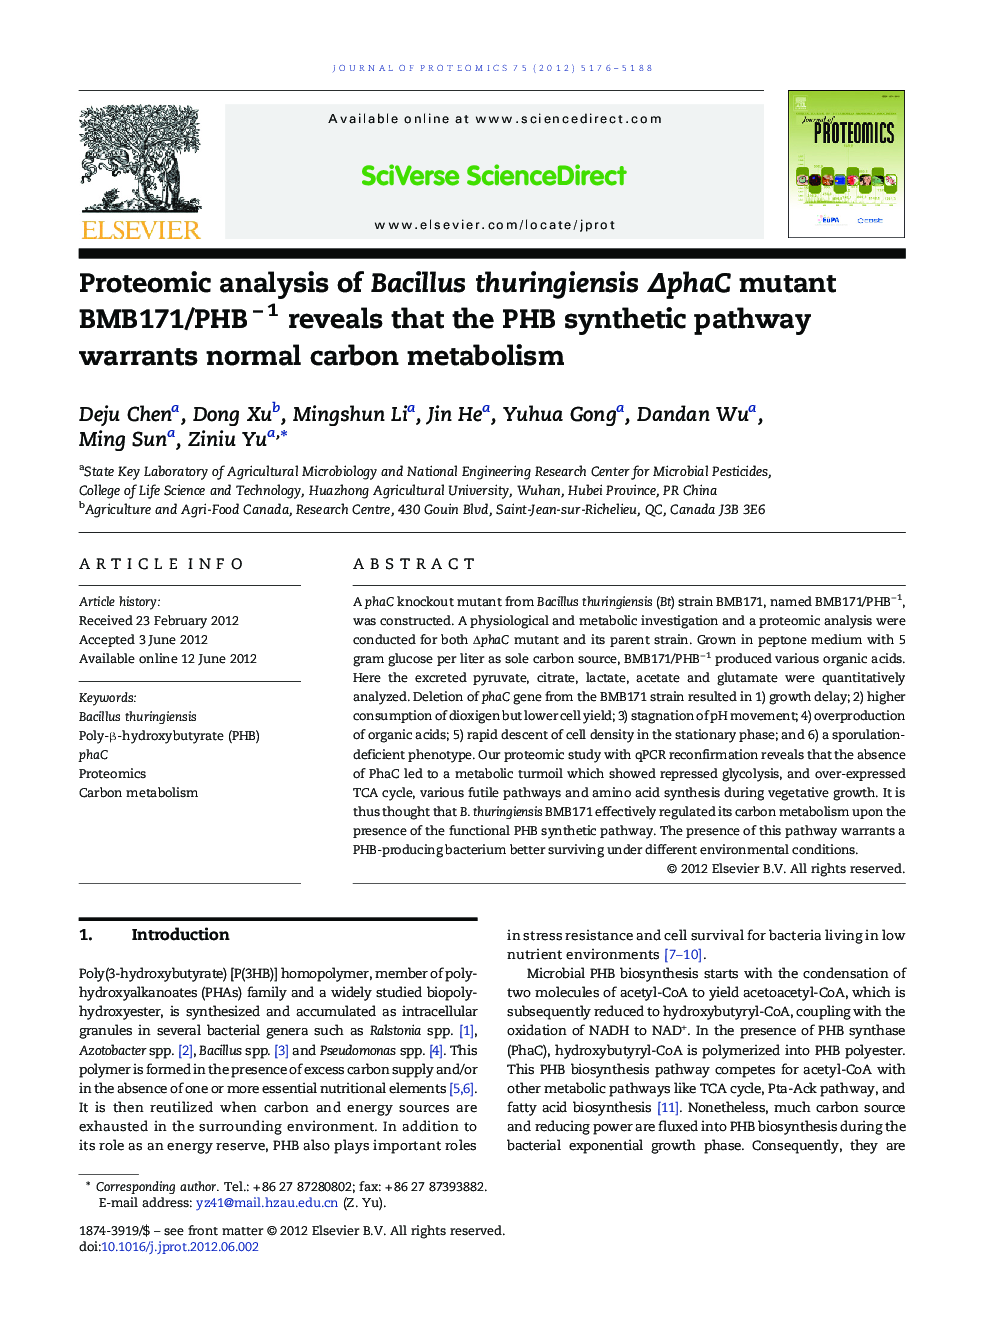 Proteomic analysis of Bacillus thuringiensis ÎphaC mutant BMB171/PHBâÂ 1 reveals that the PHB synthetic pathway warrants normal carbon metabolism